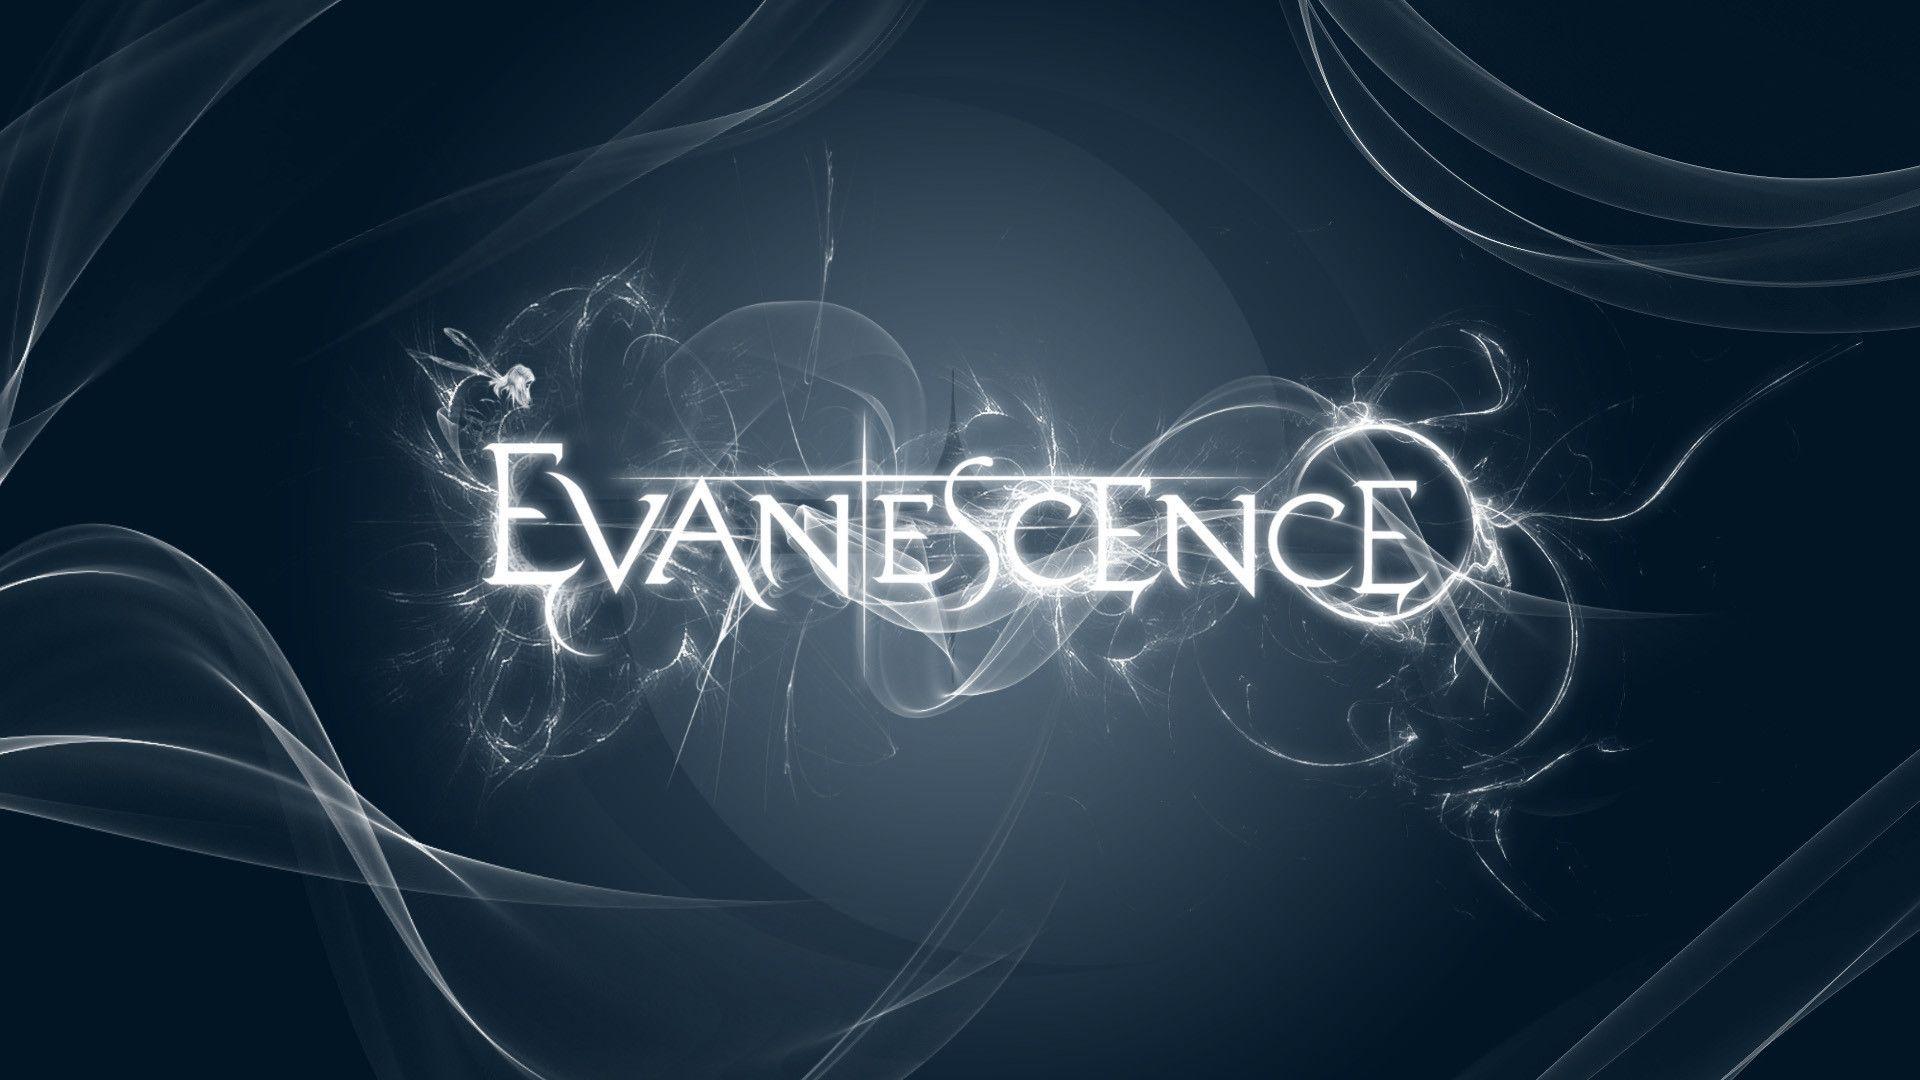 Evanescence Deluxe Cd Wallpaper Reddit 1920x1080